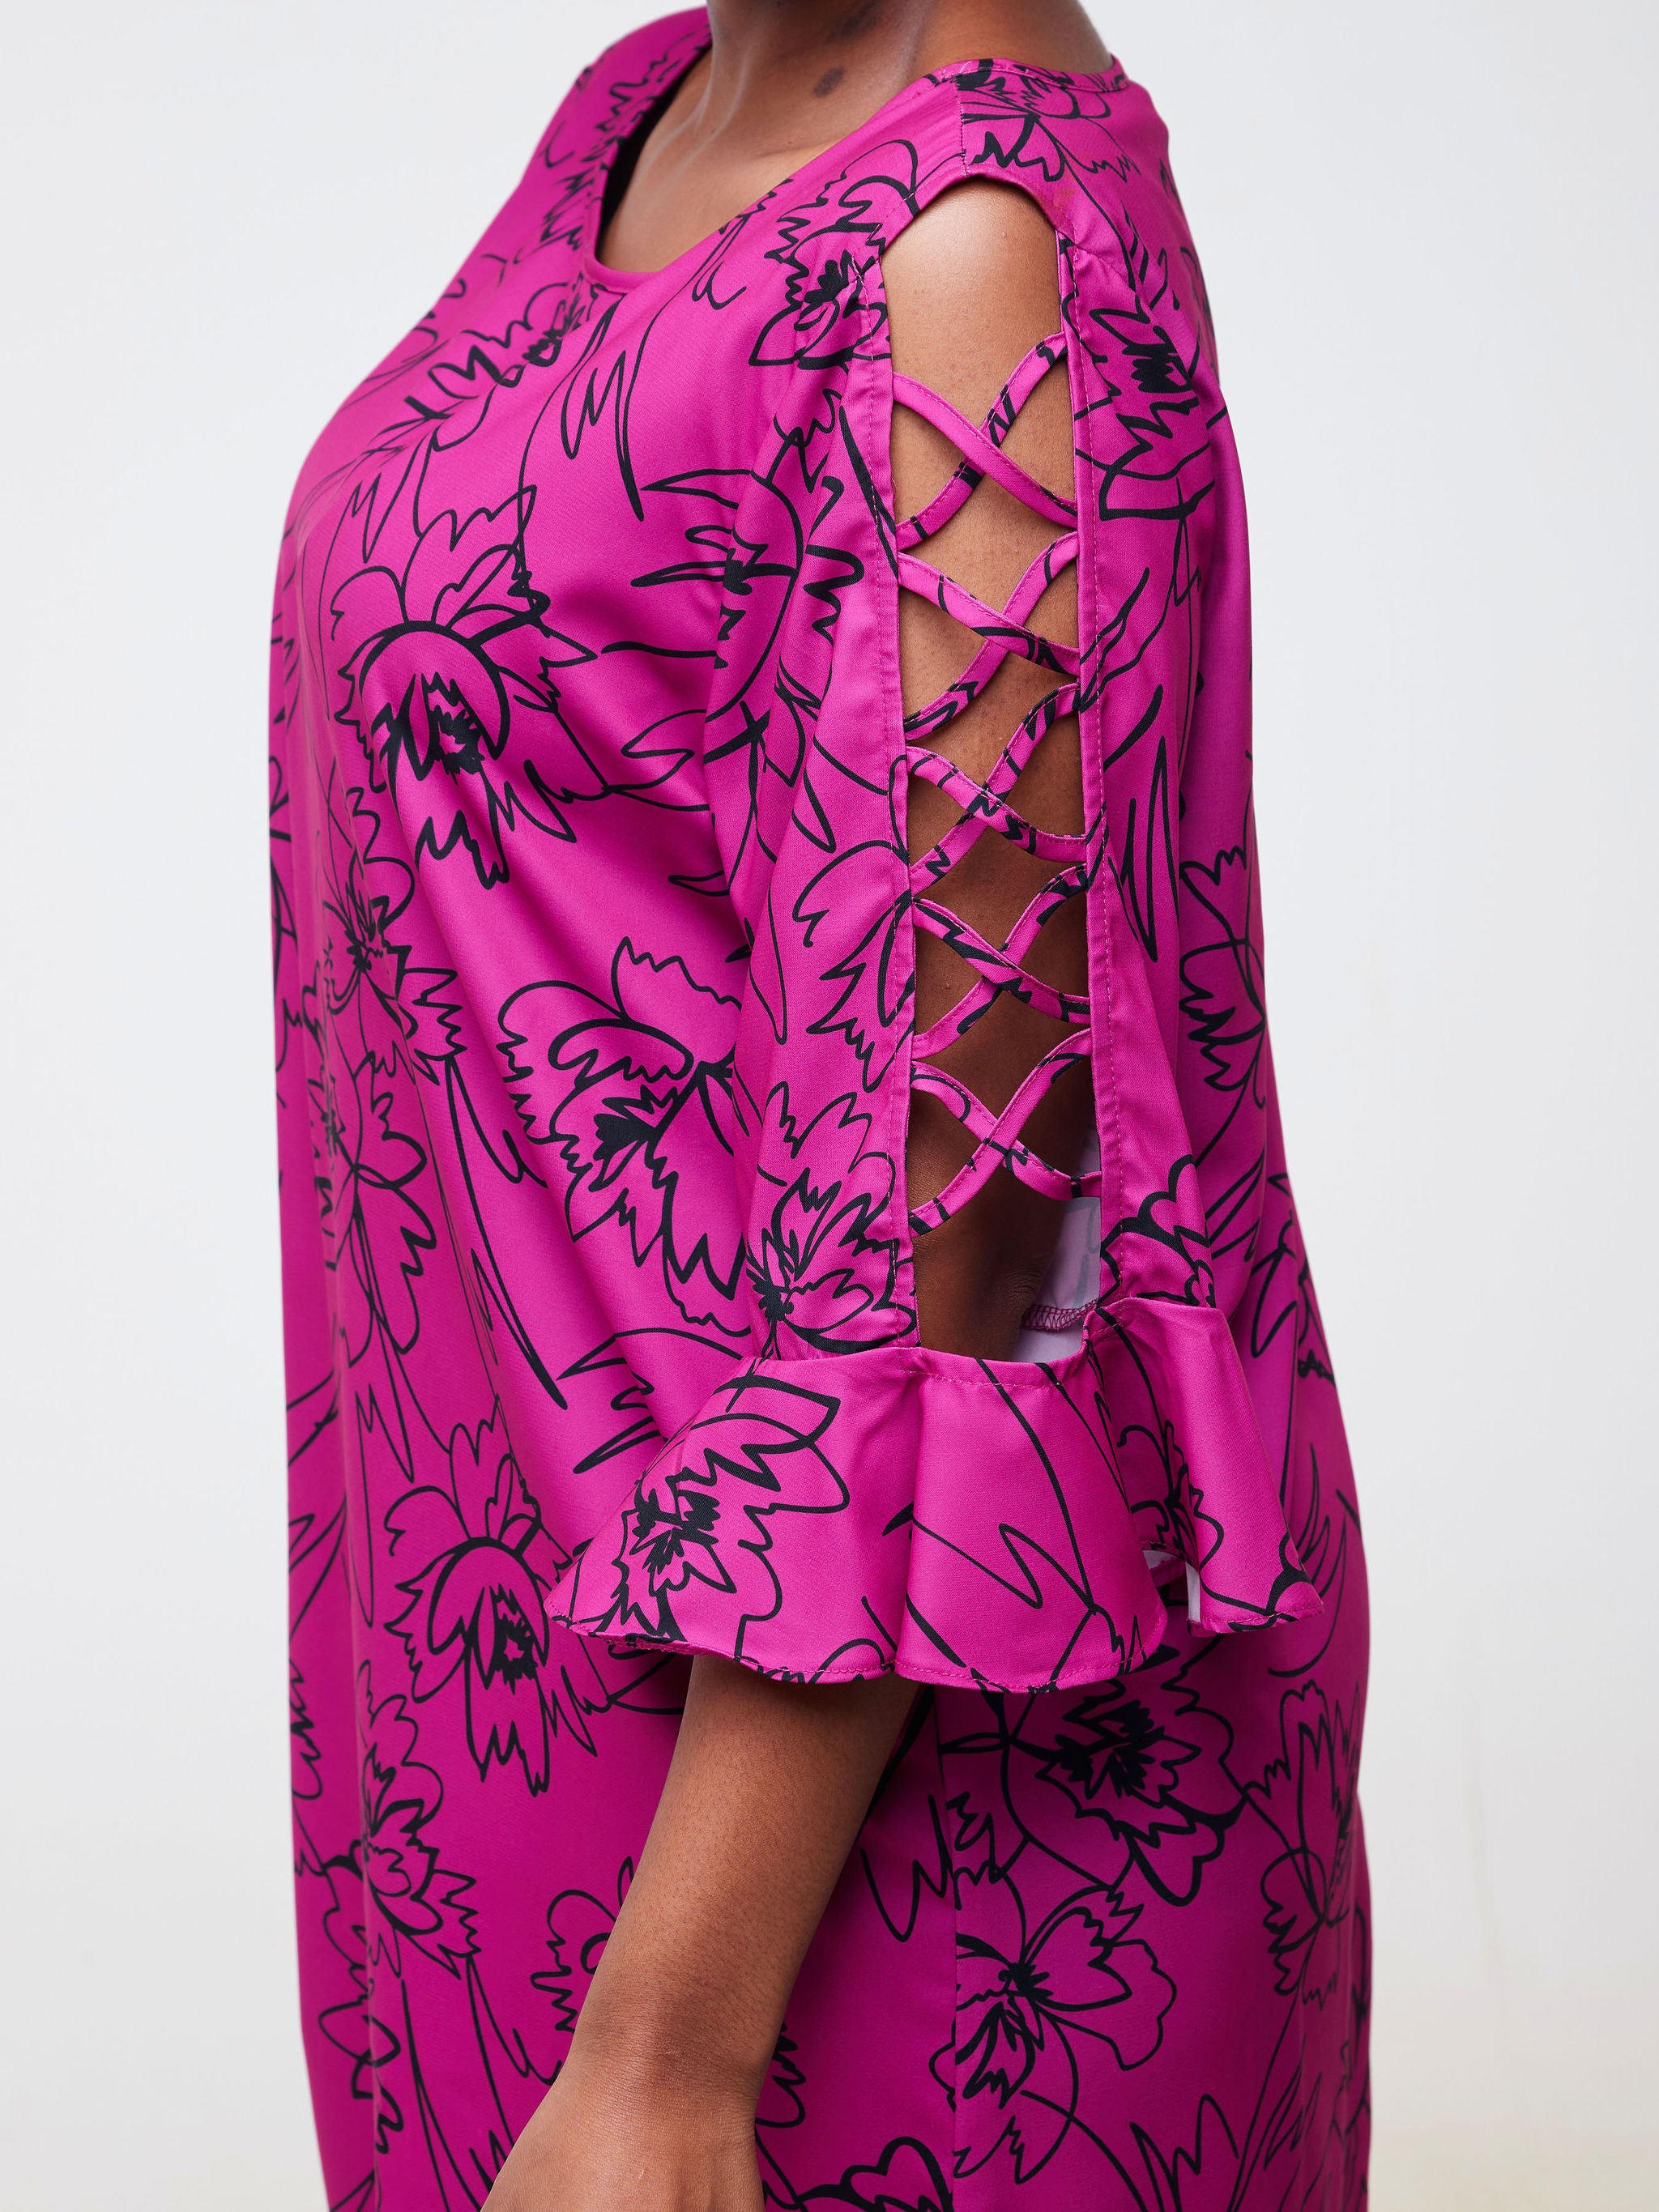 Vivo Dali 3/4 Cut Out Sleeve Shift Dress ( Petite) - Pink / Black Floral Print